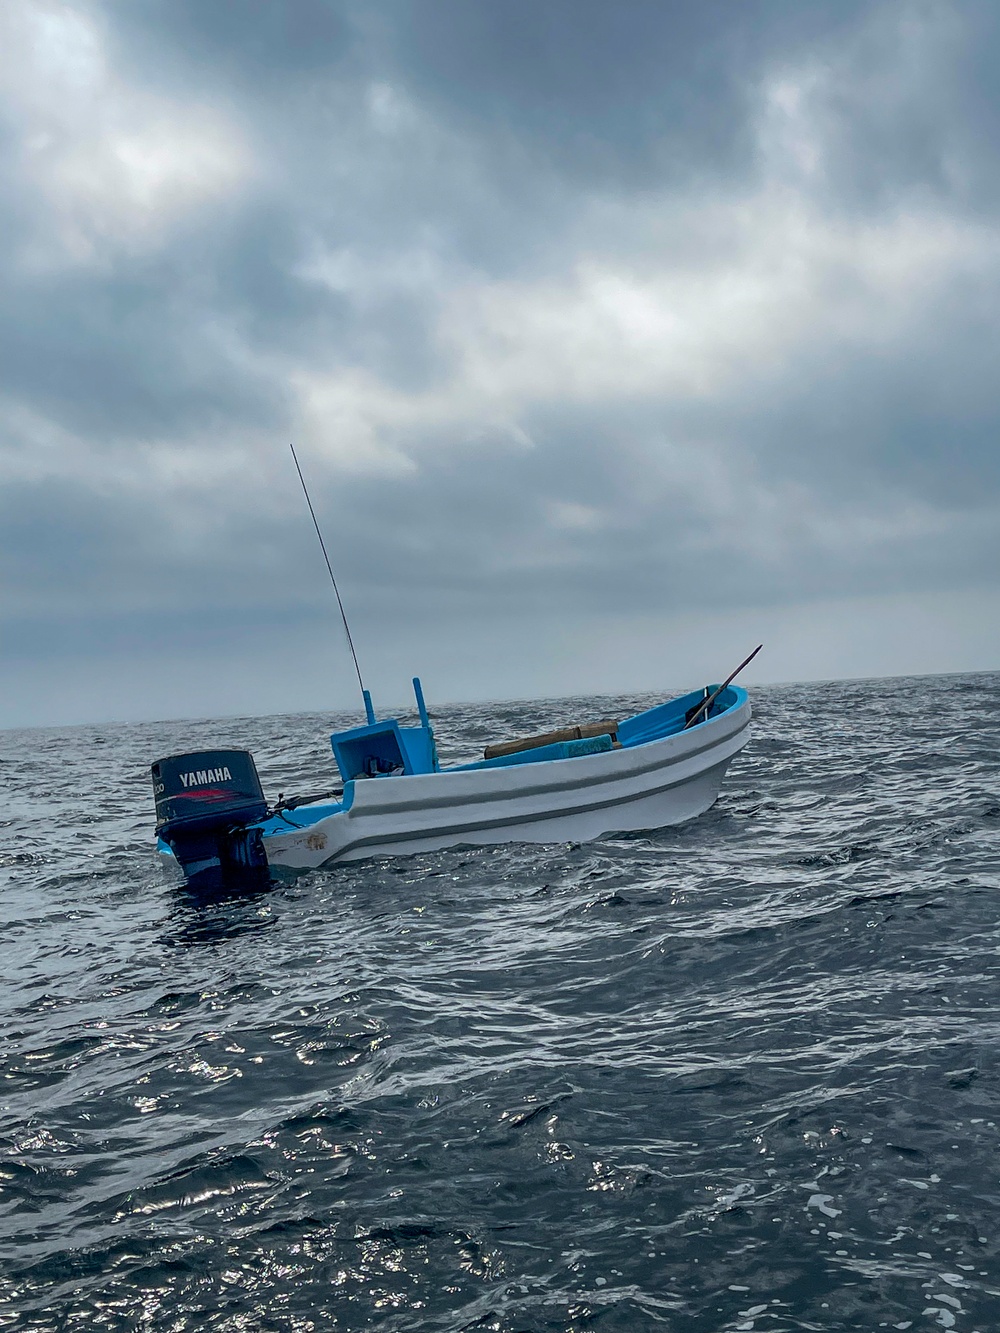 DVIDS - Images - Coast Guard interdicts lancha crew illegally fishing off  Texas coast [Image 1 of 4]